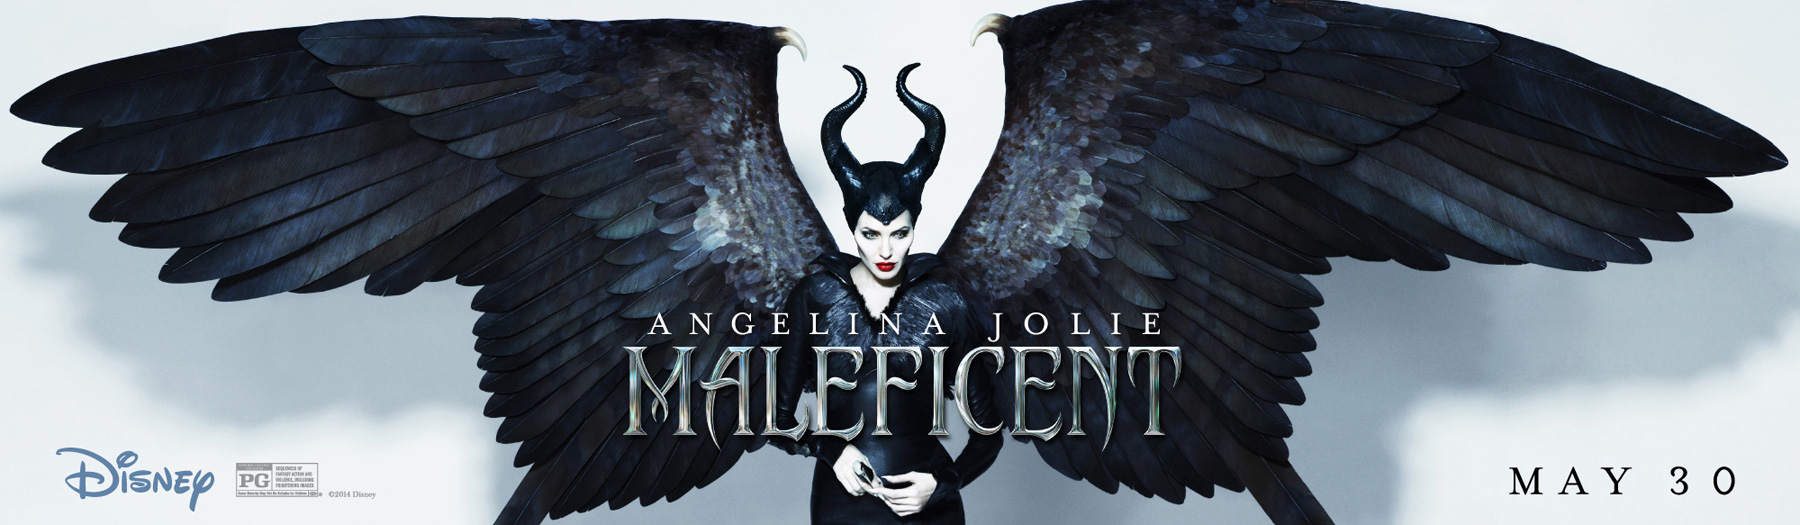 New Maleficent teaser trailer: ‘Wings’